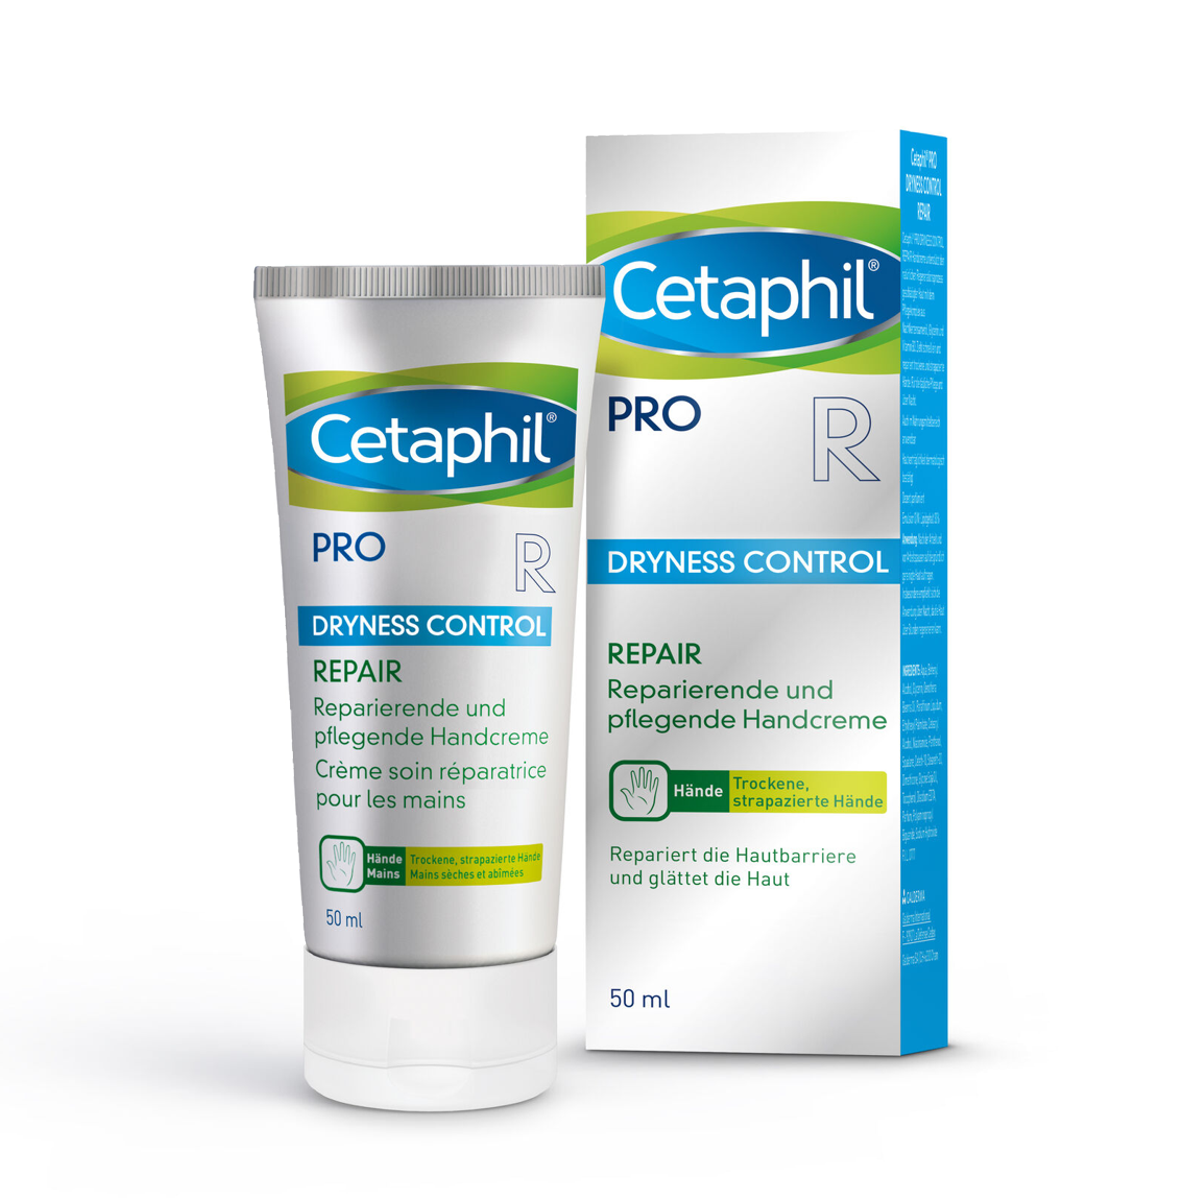 Cetaphil Pro Dryness Control Repair Handcreme 50 ml